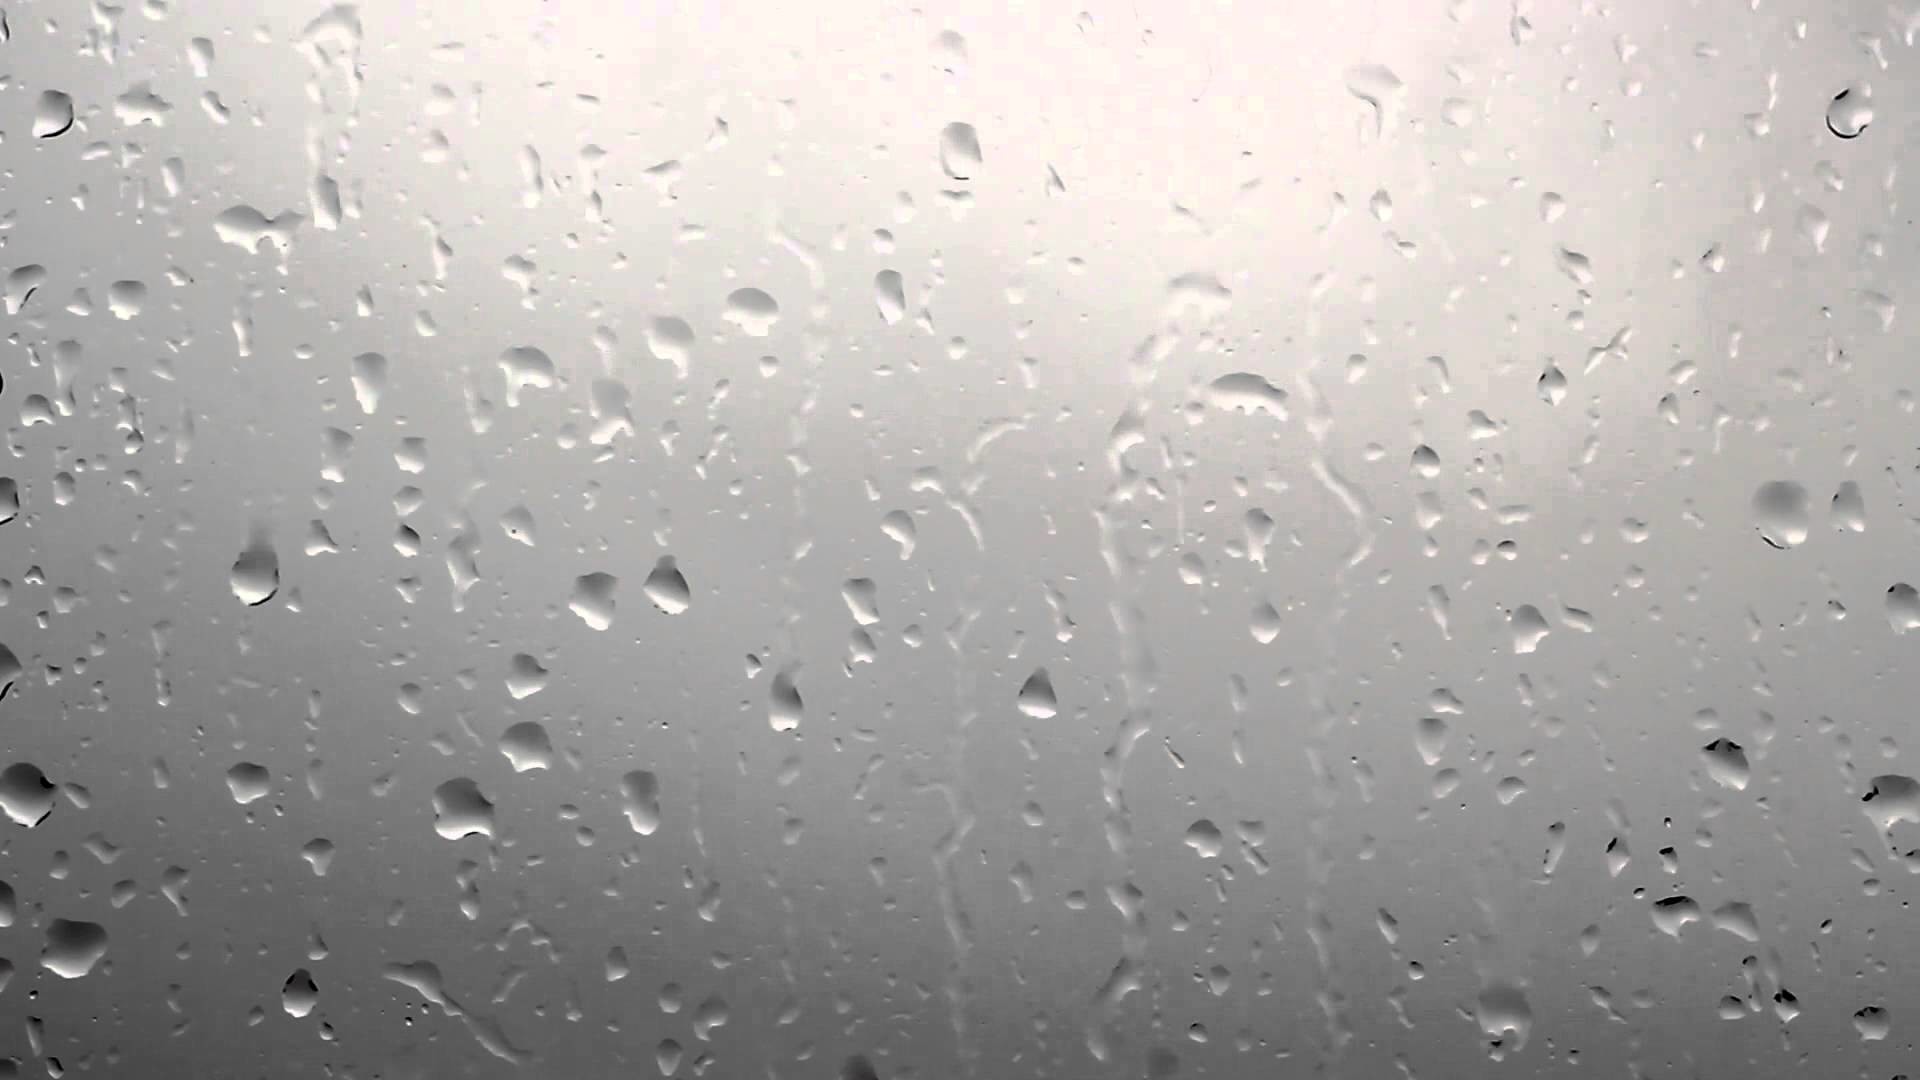 1920x1080 Rainy Window, Raindrops on Window Dark Clouds Background - Free Stock Video  - OrangeHD.com - YouTube